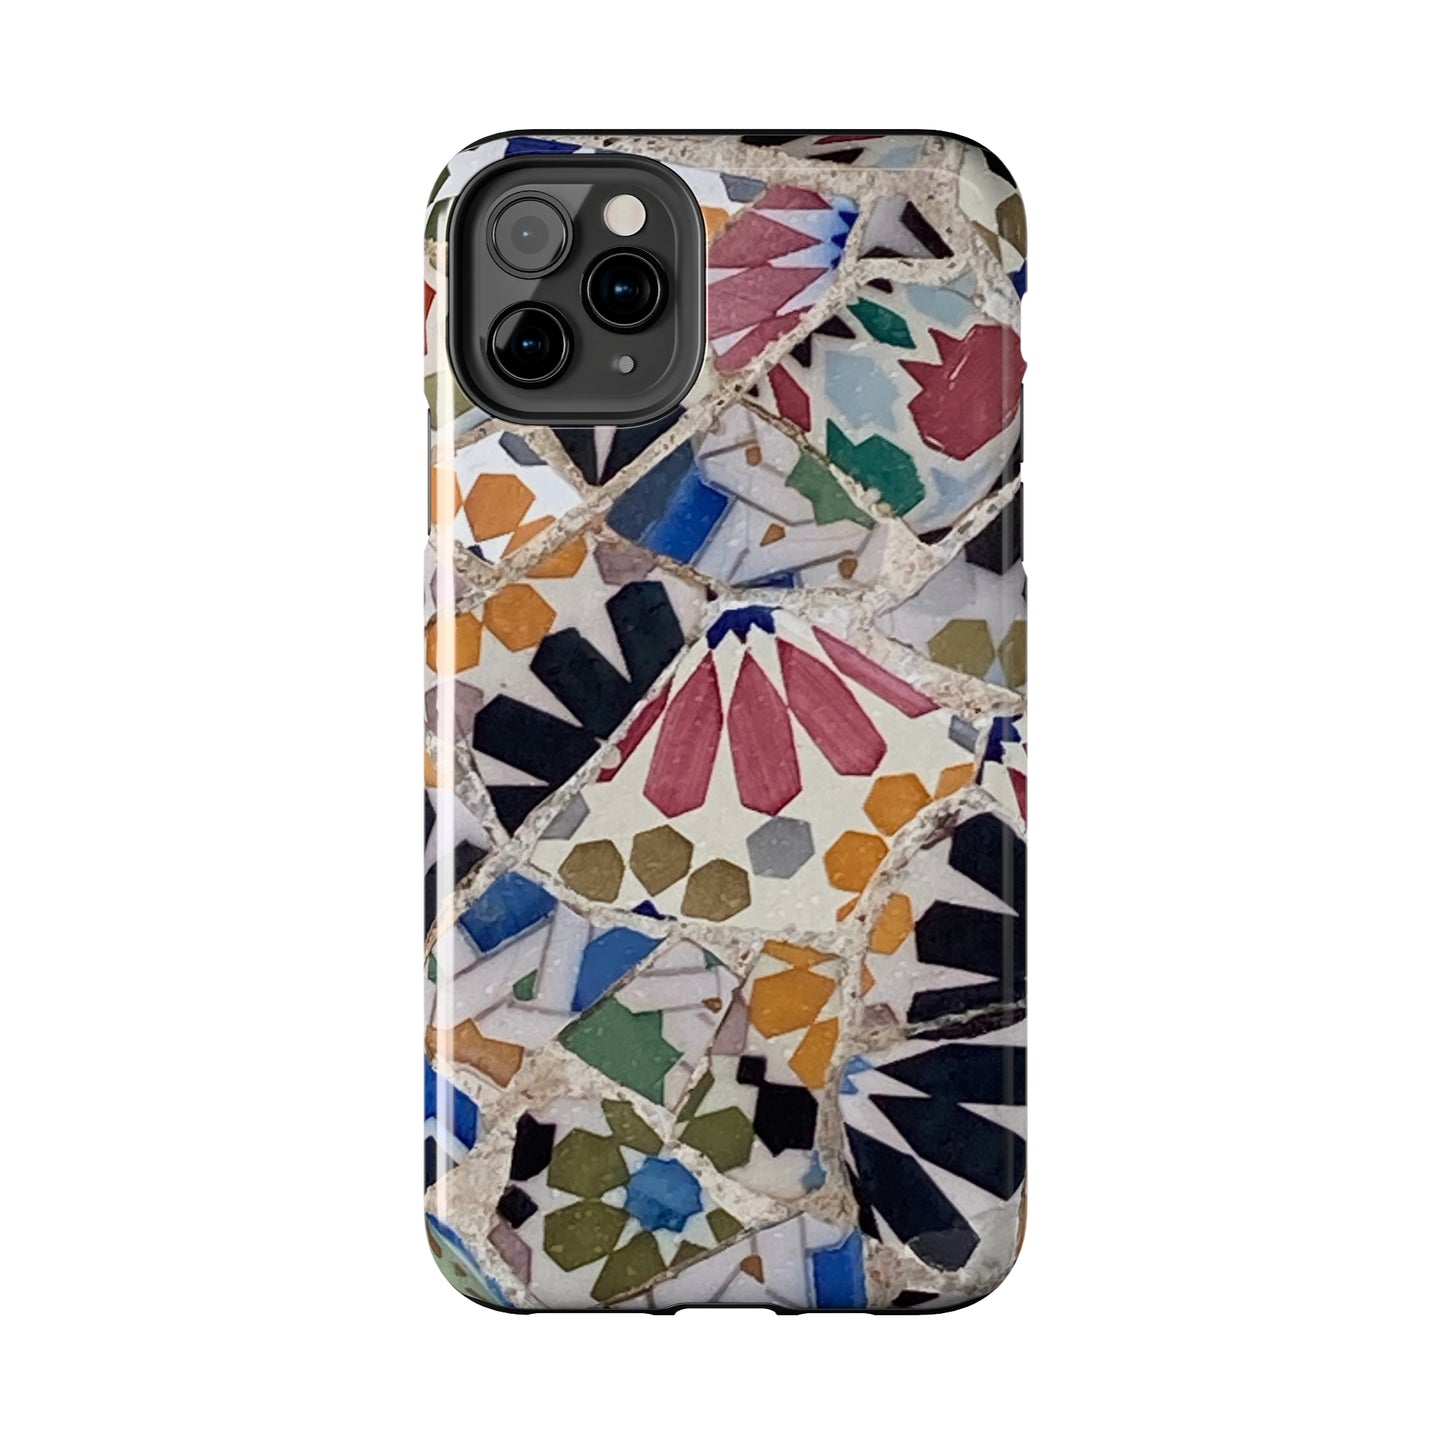 Mosaic Phone Case 2655